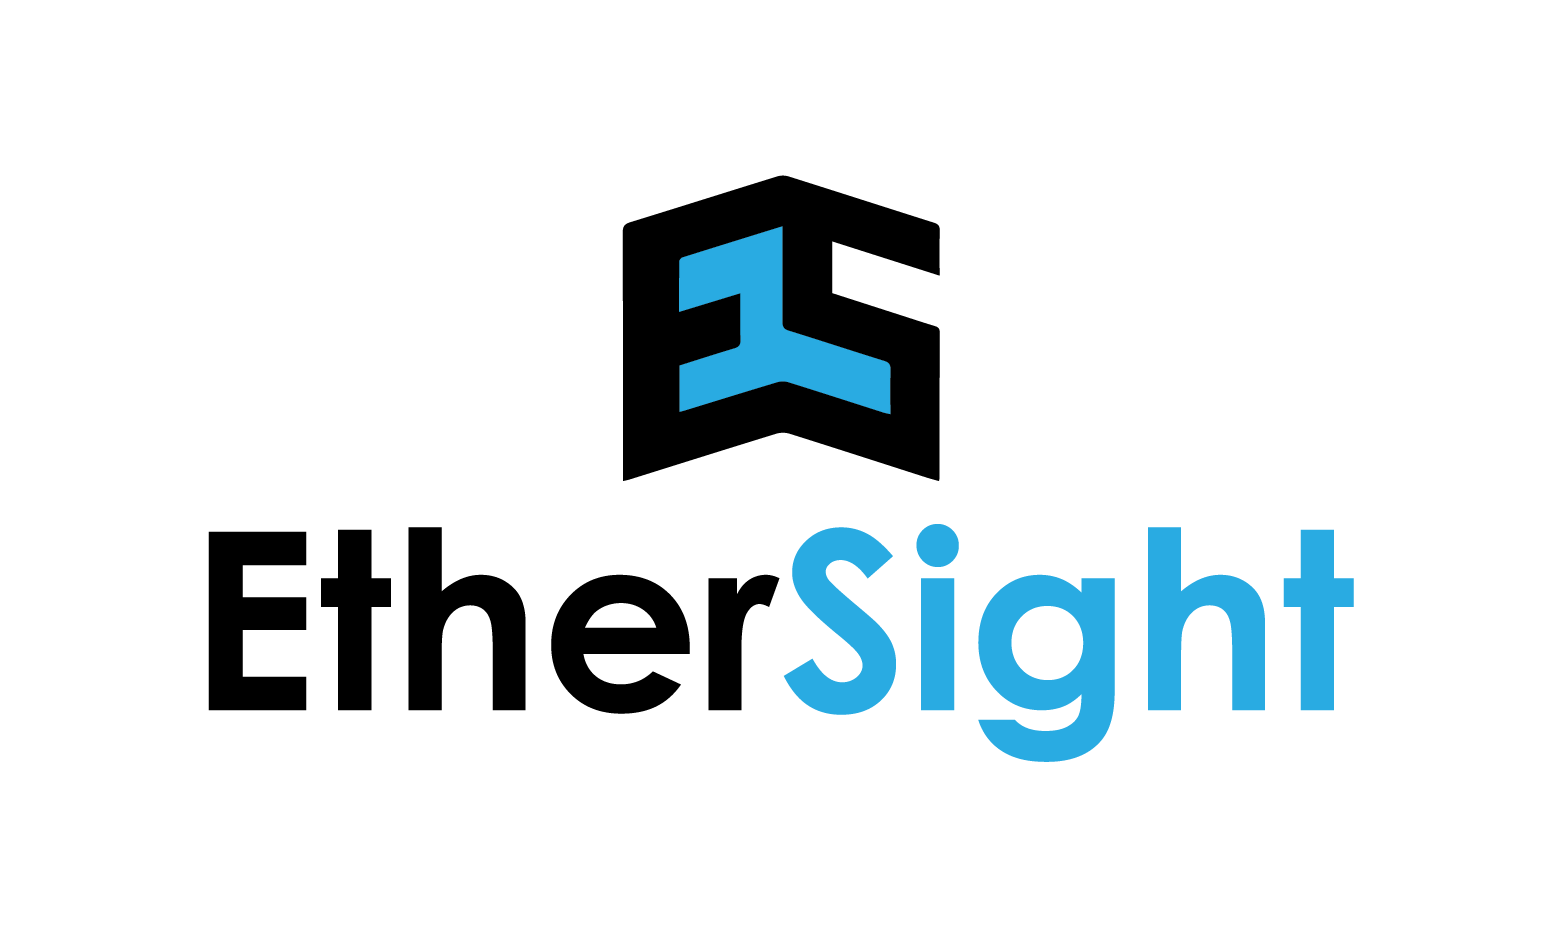 EtherSight.com - Creative brandable domain for sale